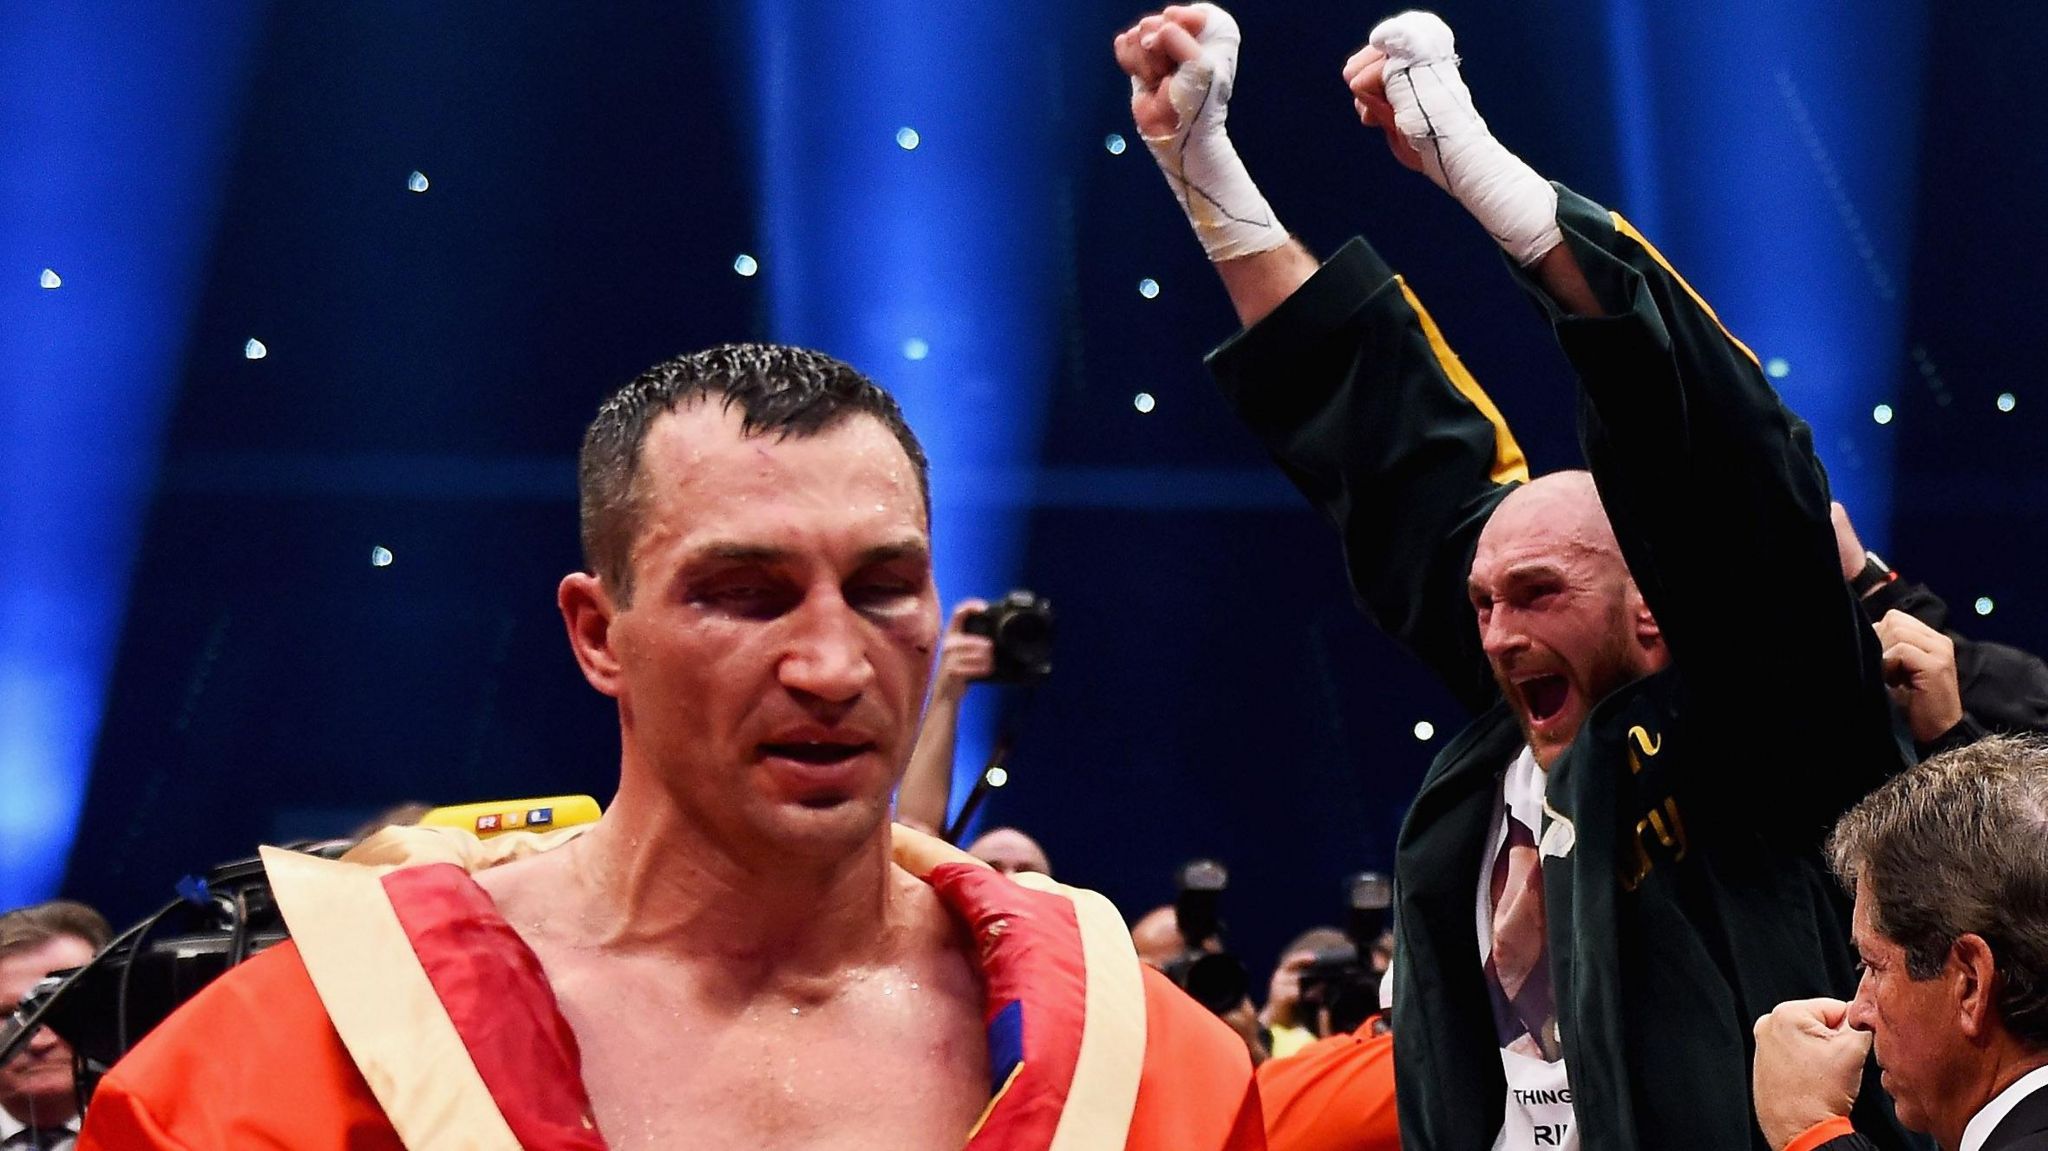 Tyson Fury celebrates while a bruised Wladimir Klitschko walks away